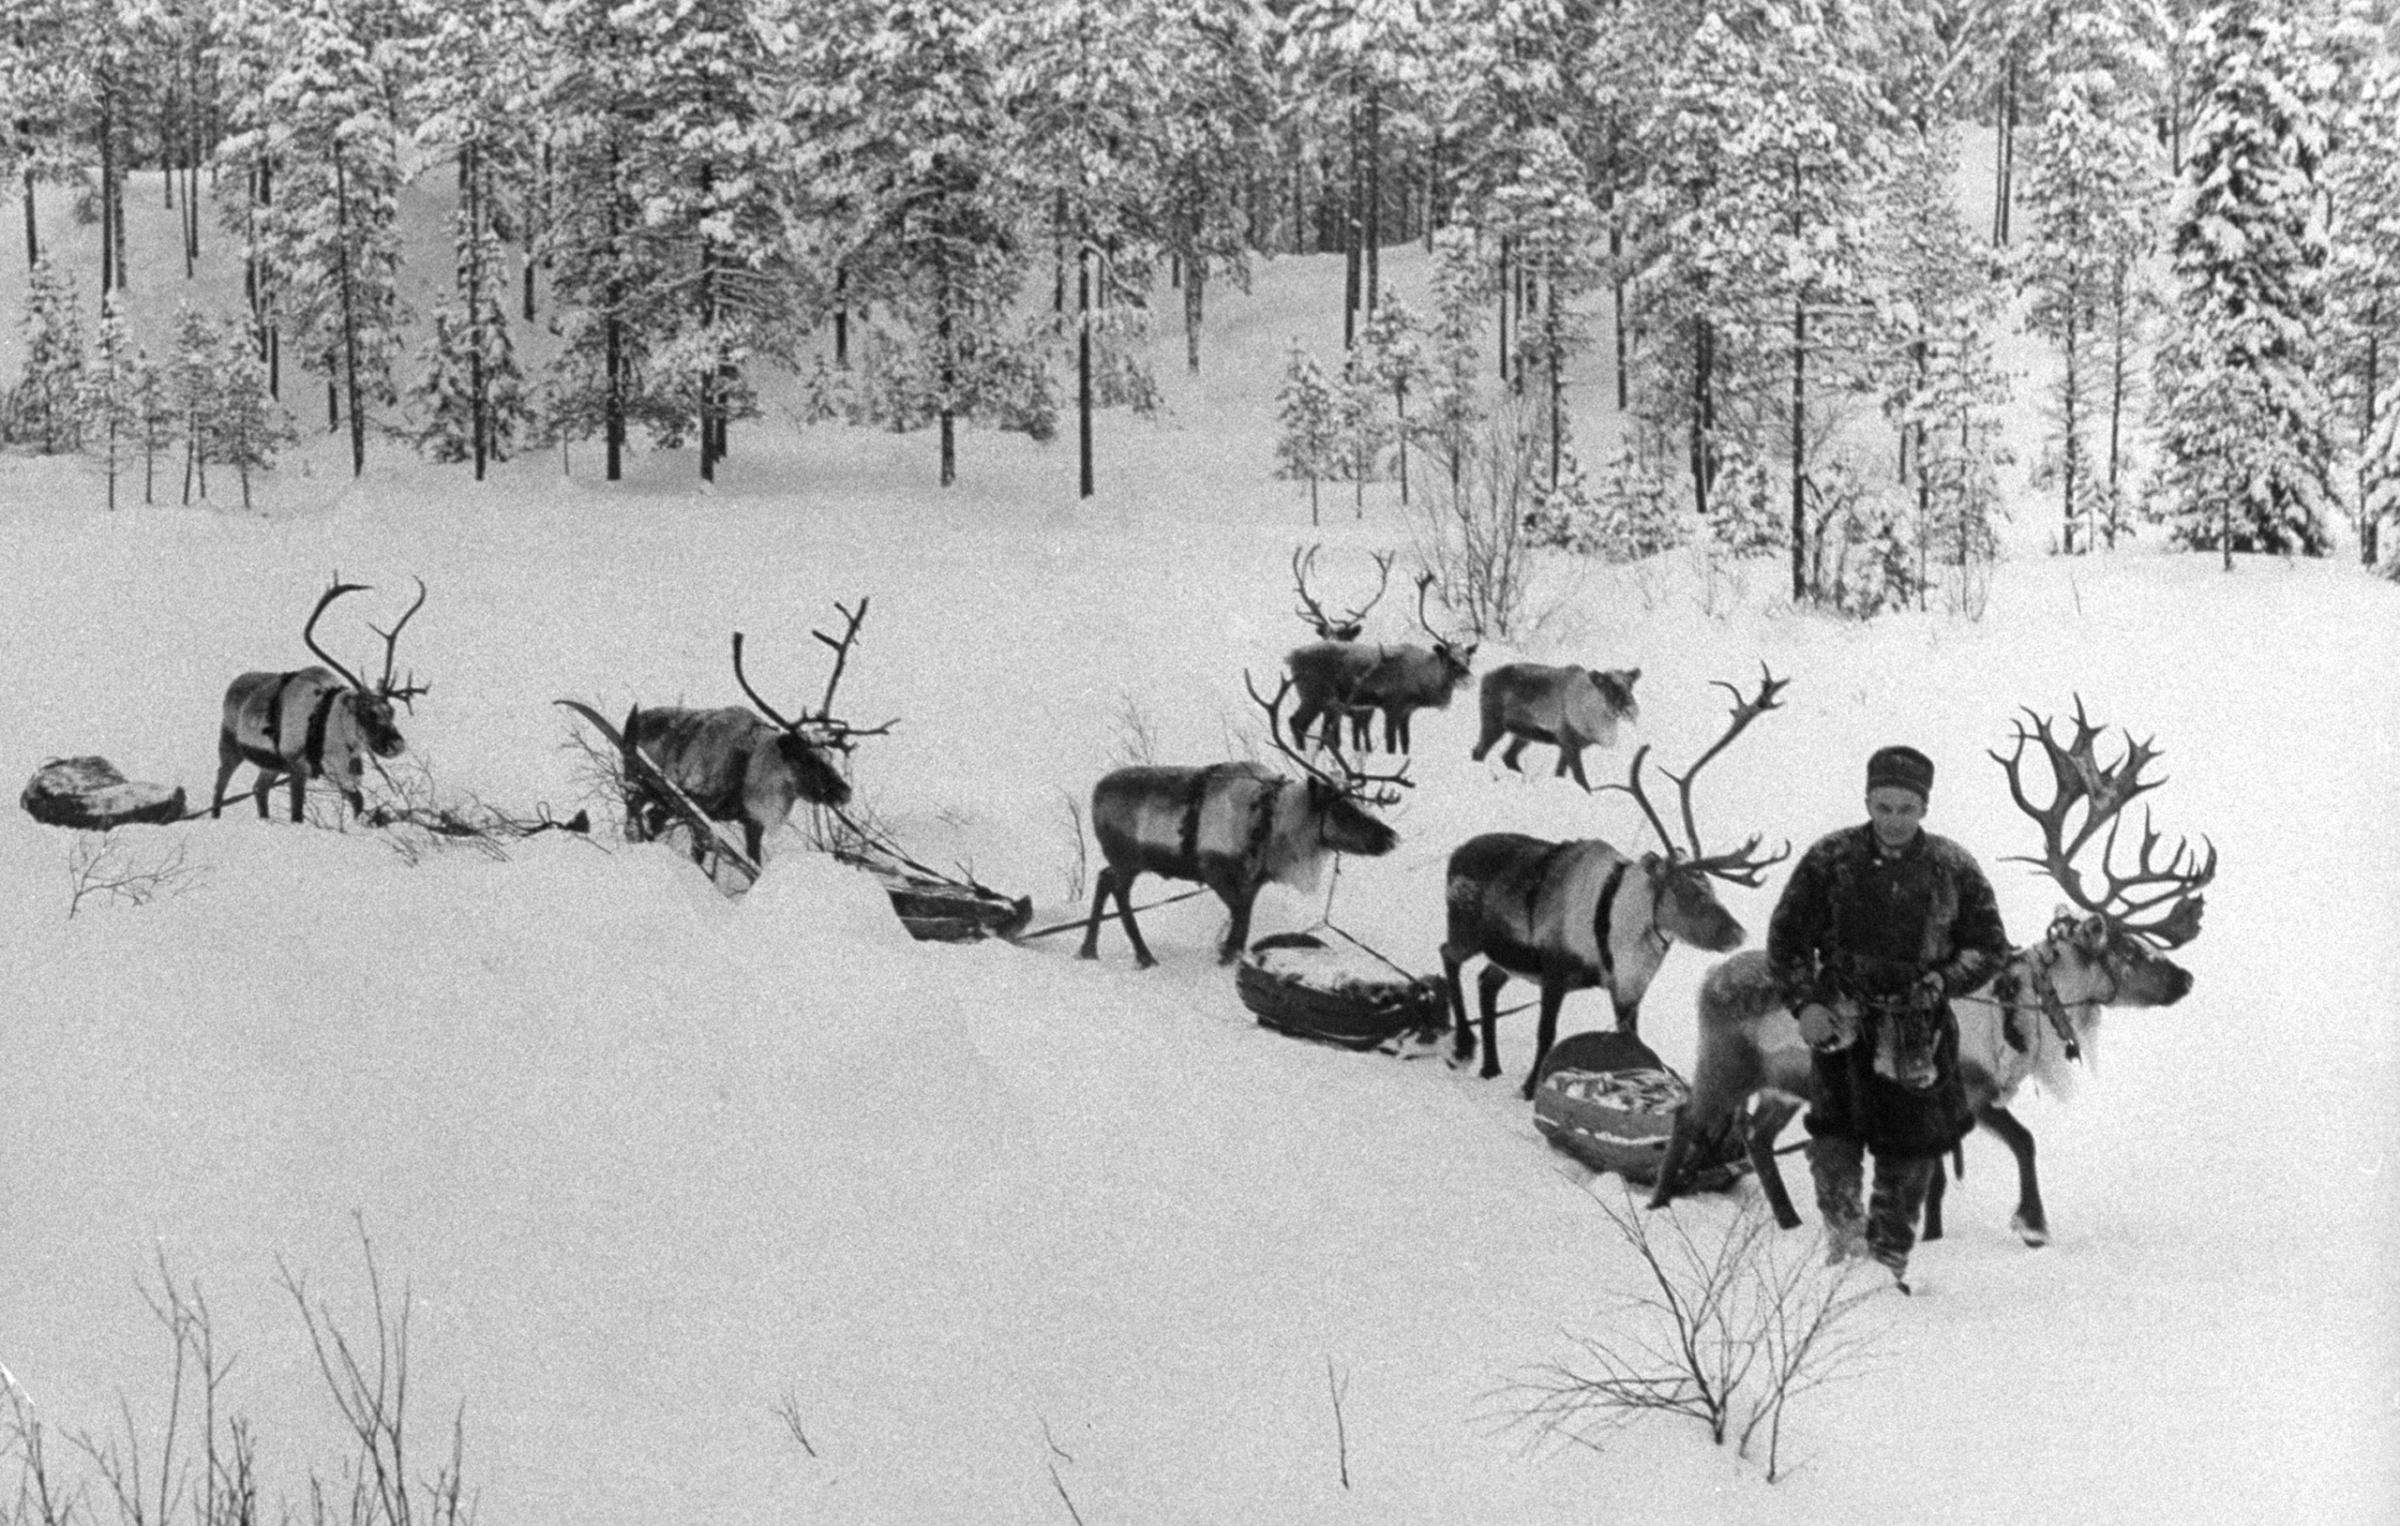 A Sami man leading his reindeer to market, Sweden, 1955.